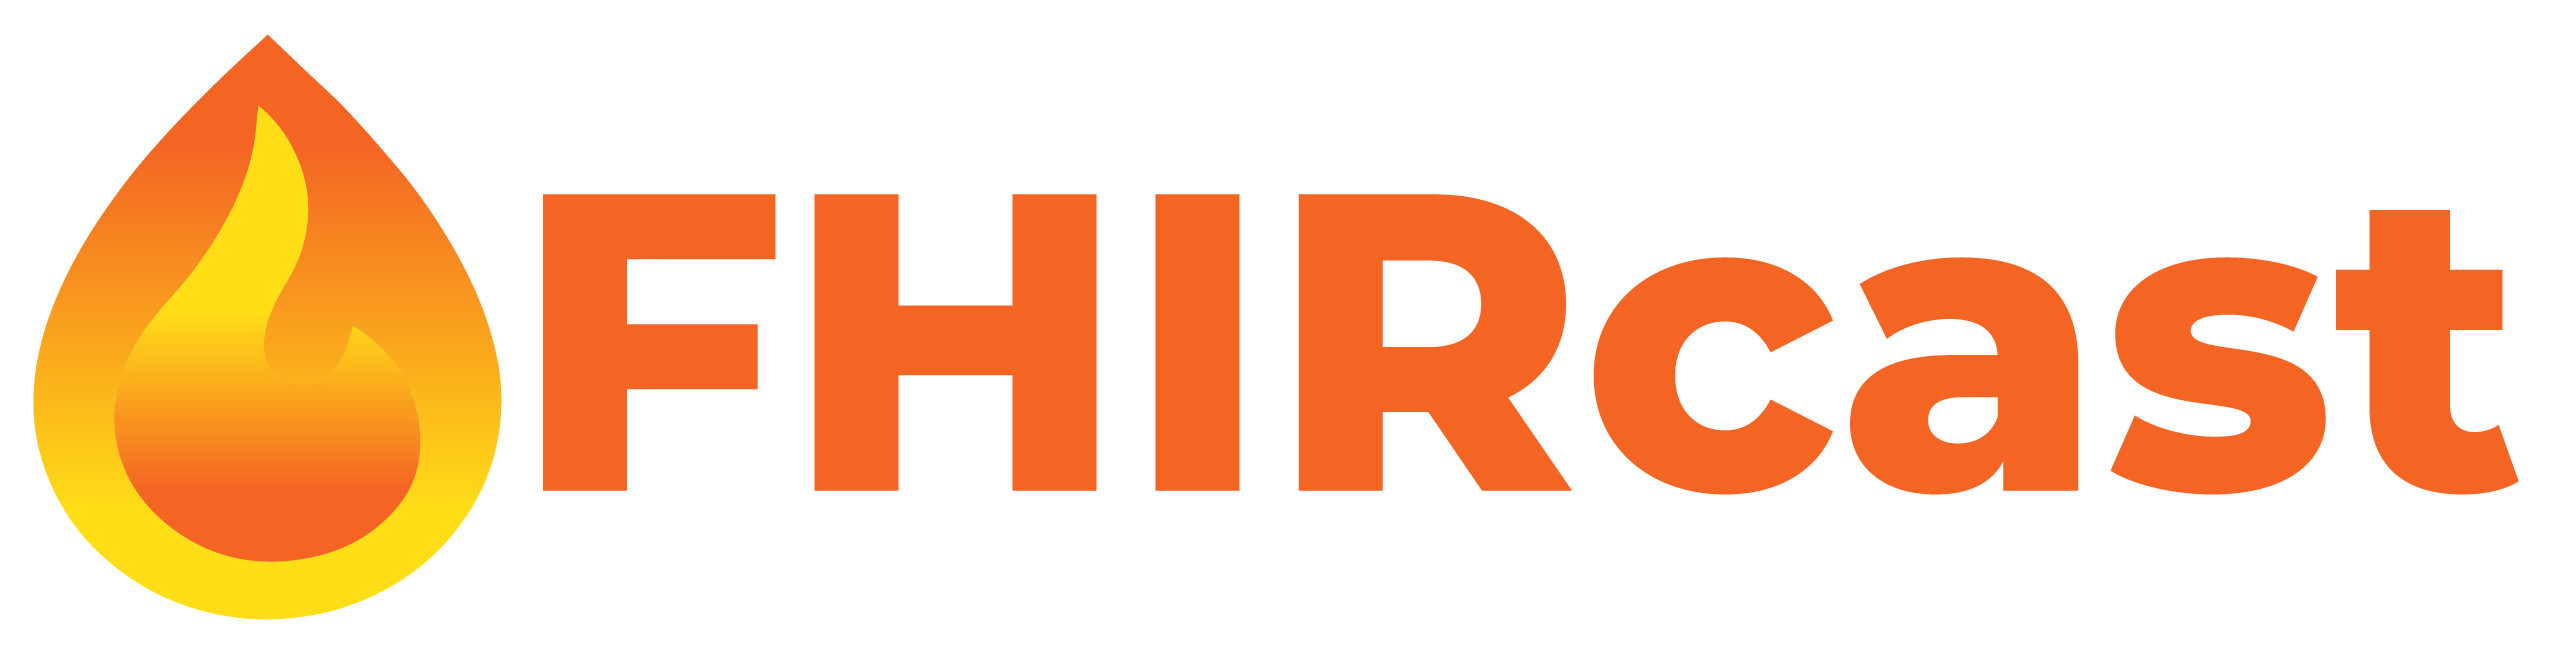 FHIRcast logo